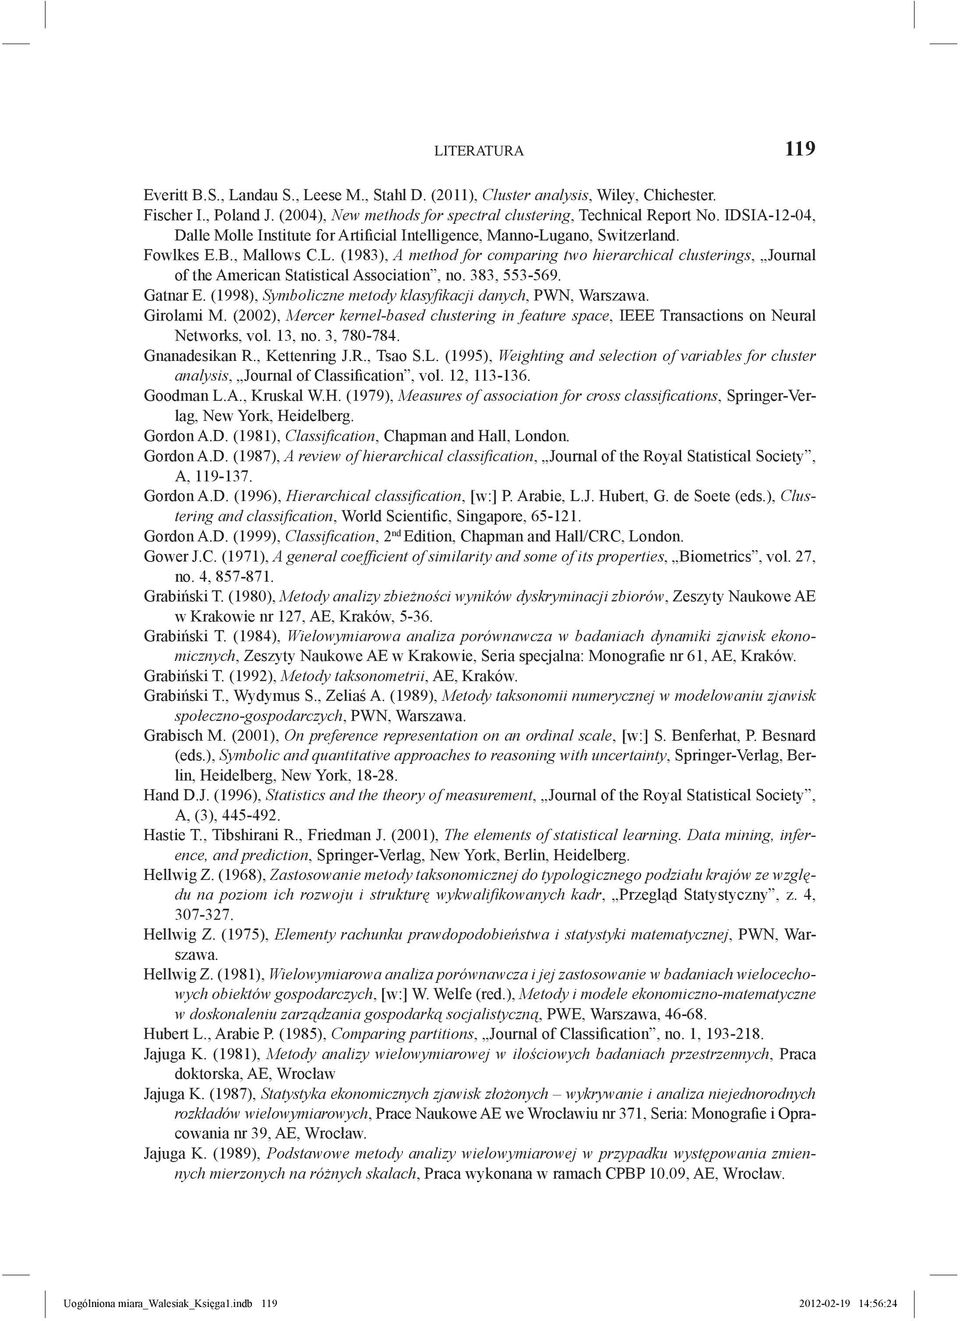 383, 553-569. Gatnar E. (1998), Symboliczne metody klasyfikacji danych, PWN, Warszawa. Girolami M. (2002), Mercer kernel-based clustering in feature space, IEEE Transactions on Neural Networks, vol.